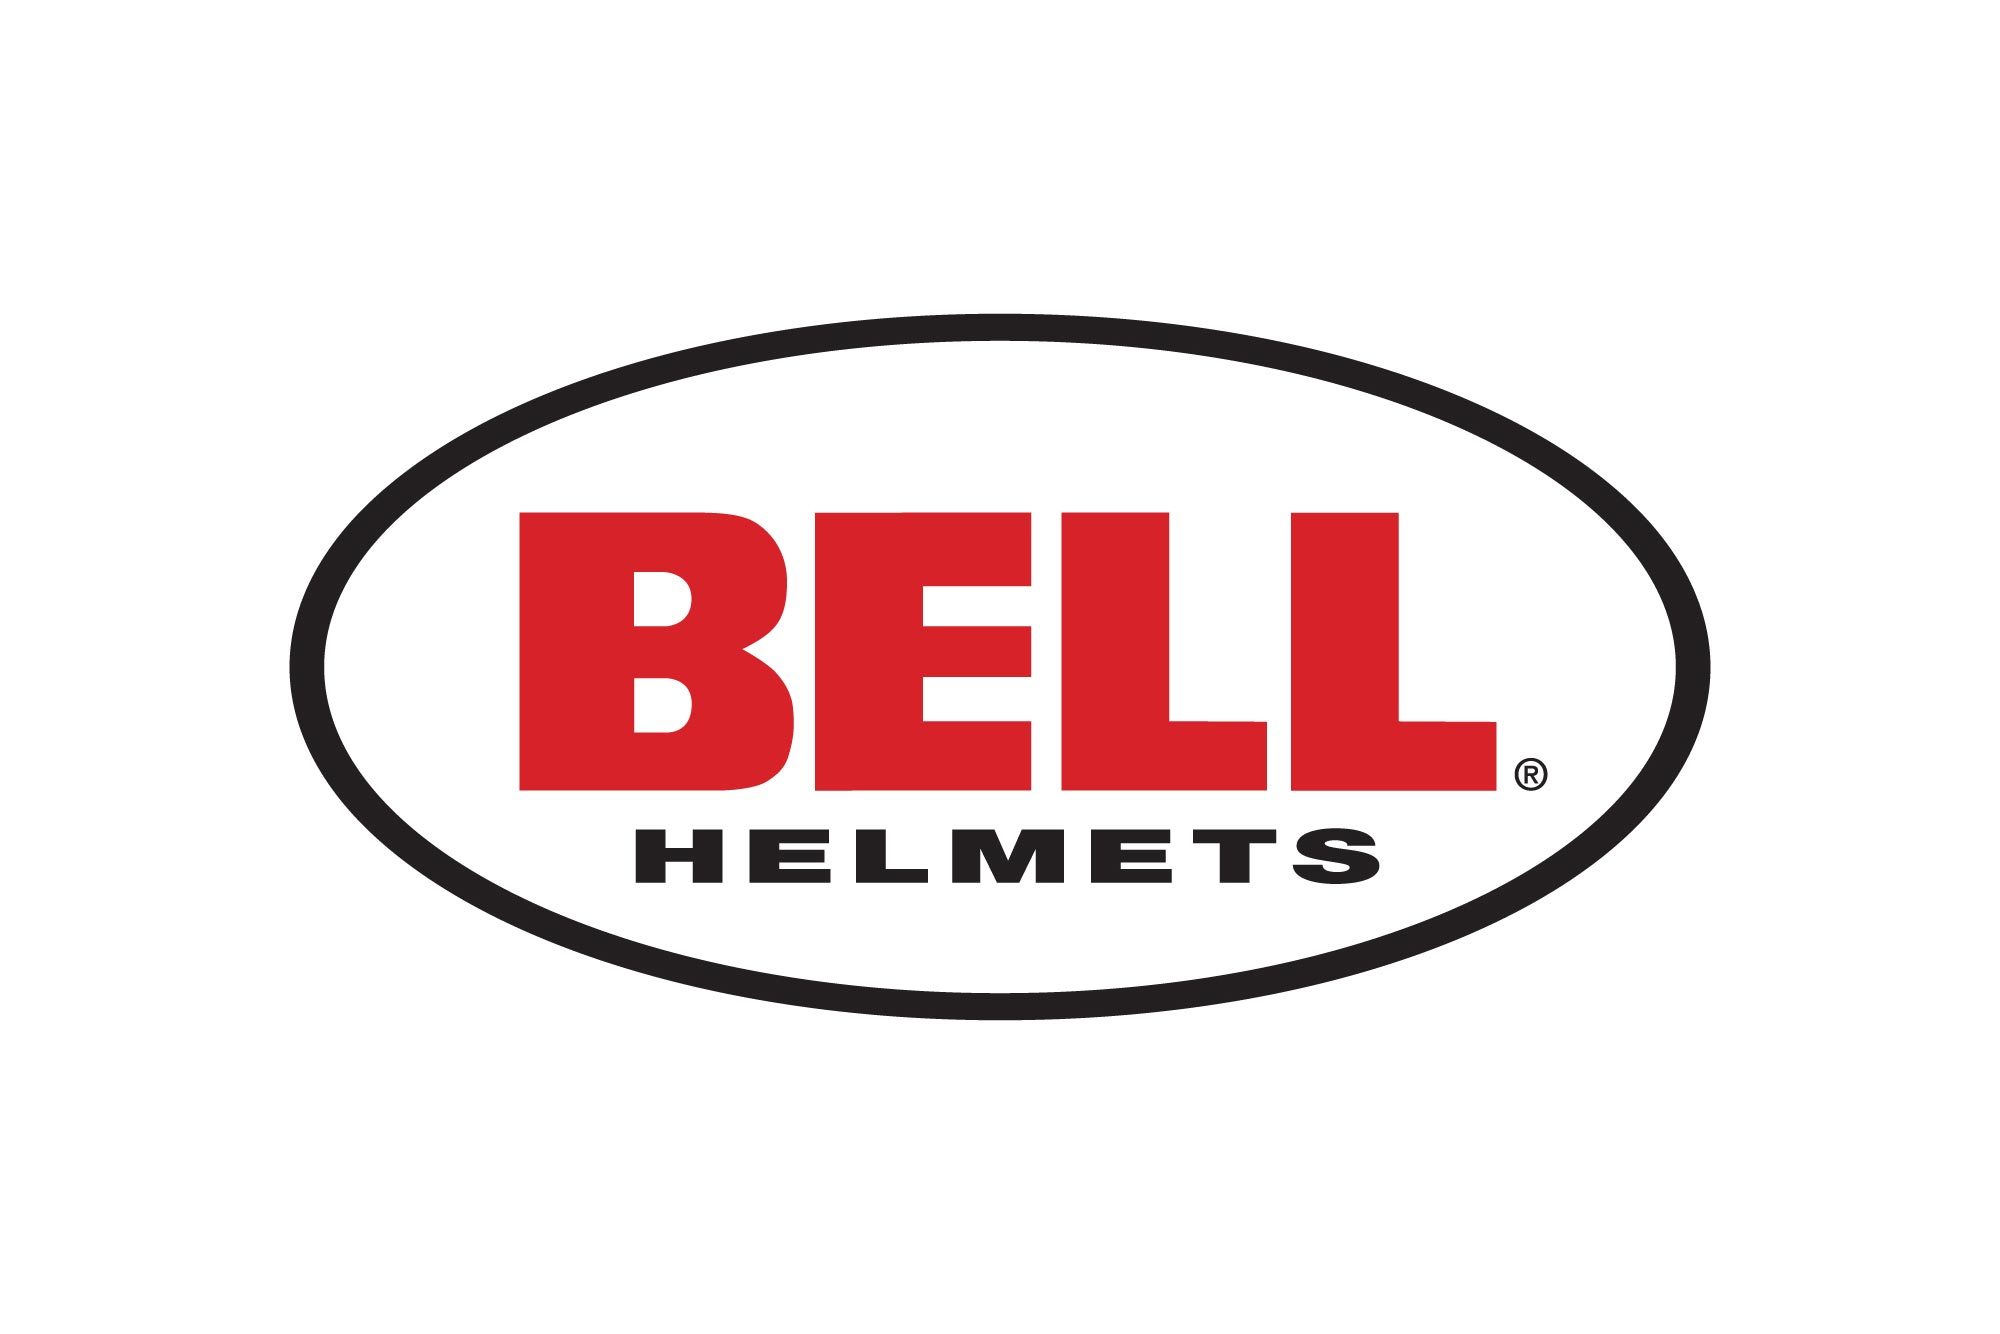 Bell-helmets-logo-1.jpg